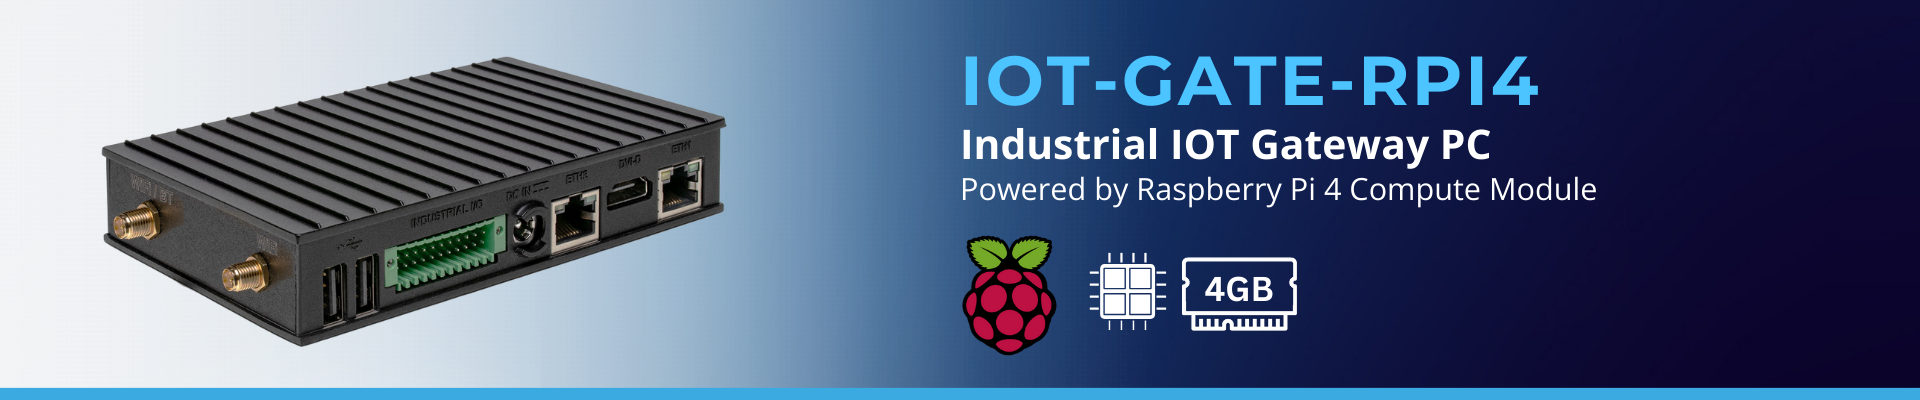 IOT-GATE-RPi4: Industrial Raspberry Pi IoT Gateway PC